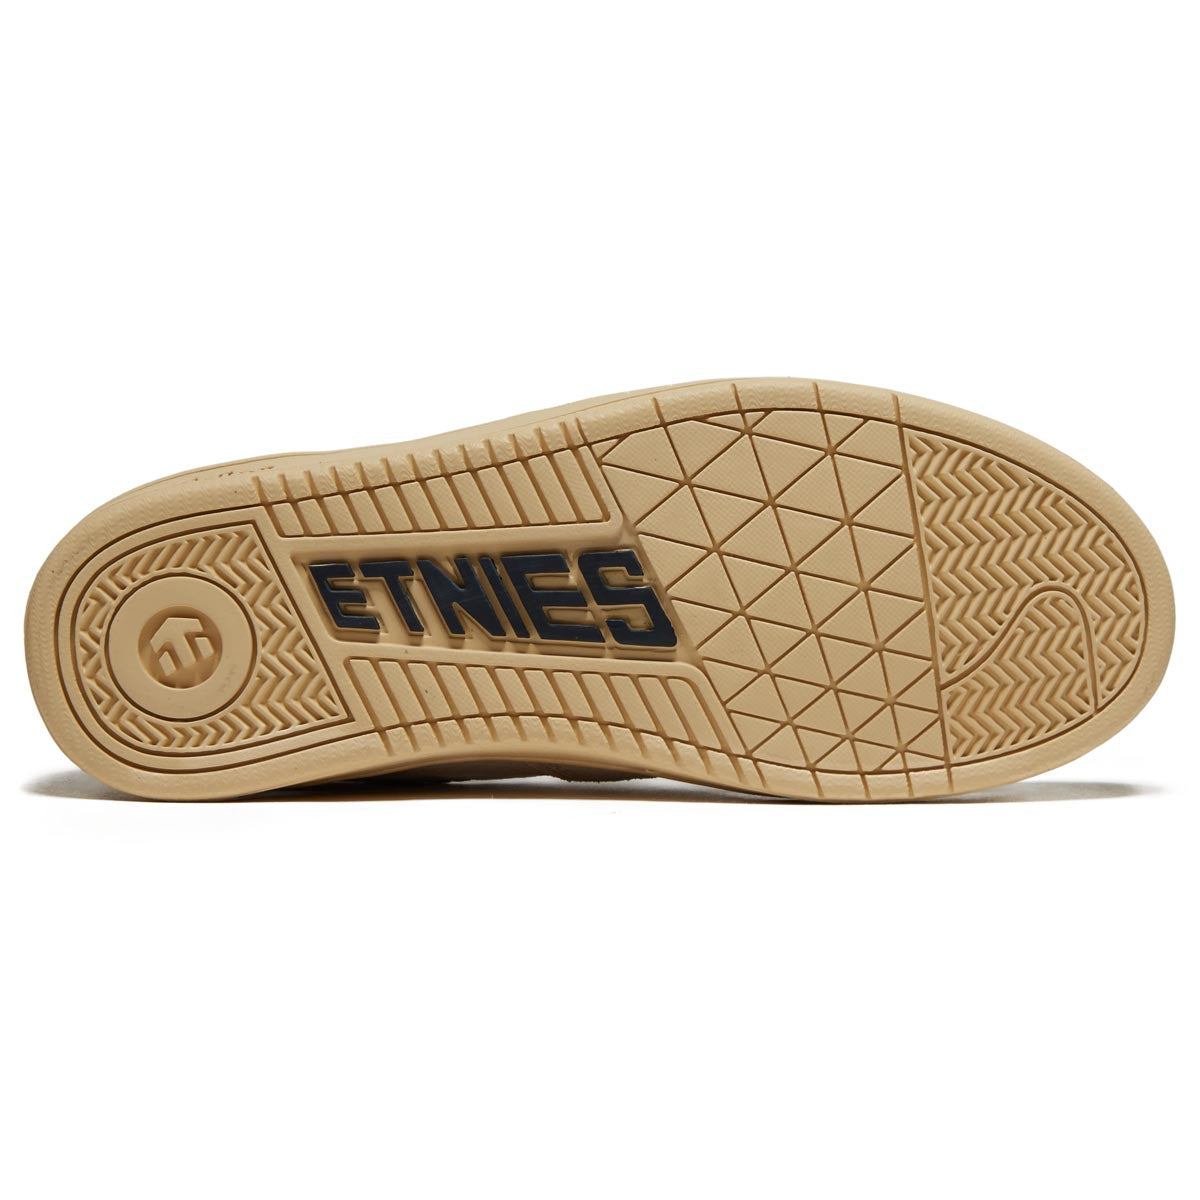 Etnies Snake Shoes - White/Navy image 4